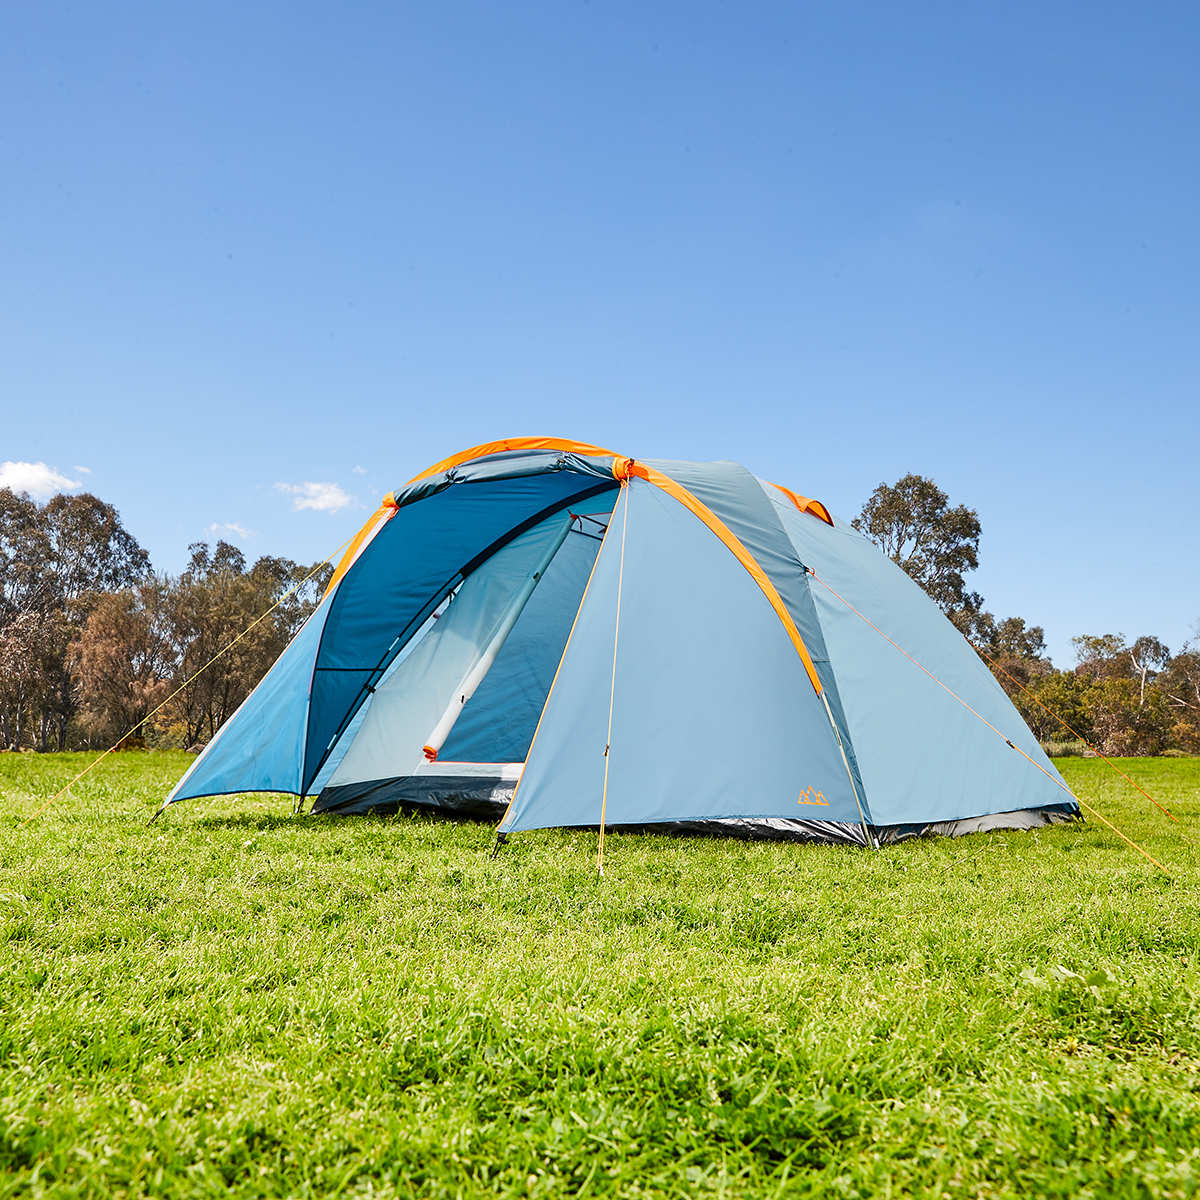 Kmart Camping Gear Sale